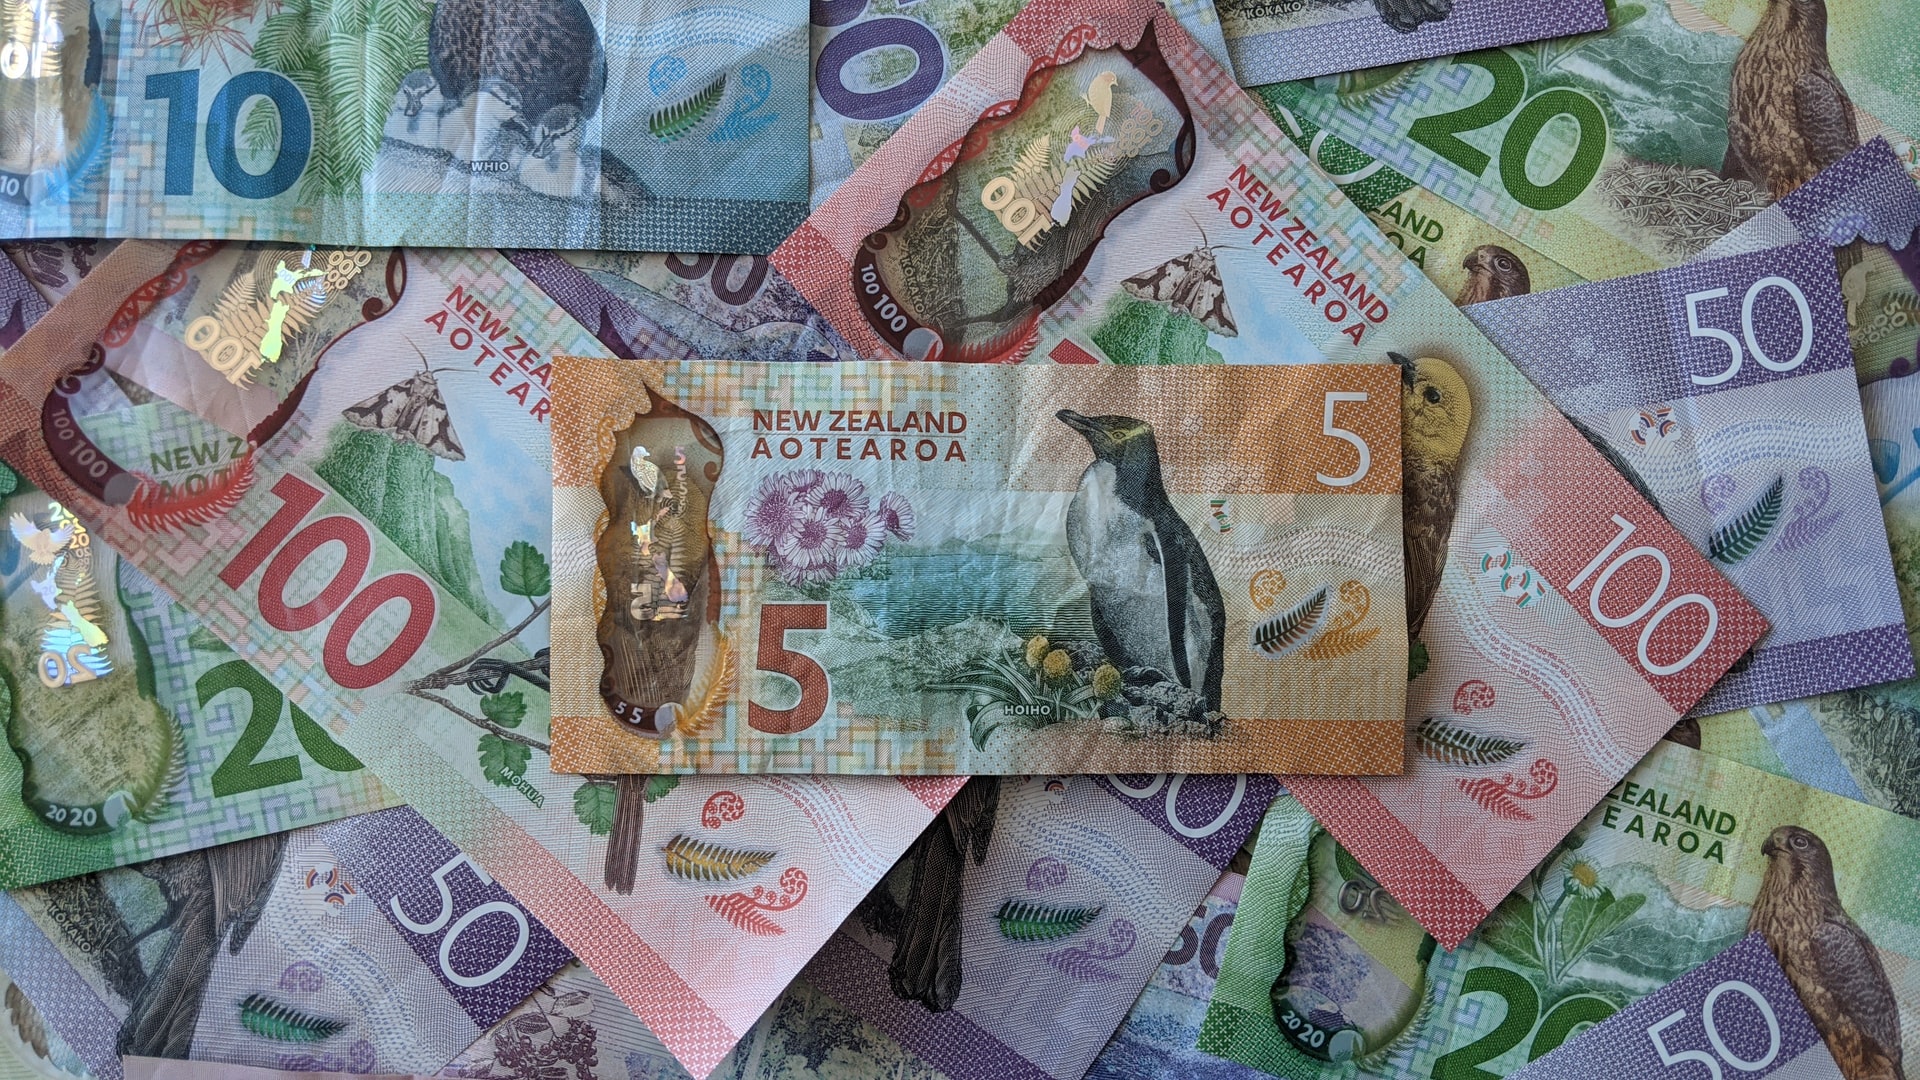 NZ dollar banknotes